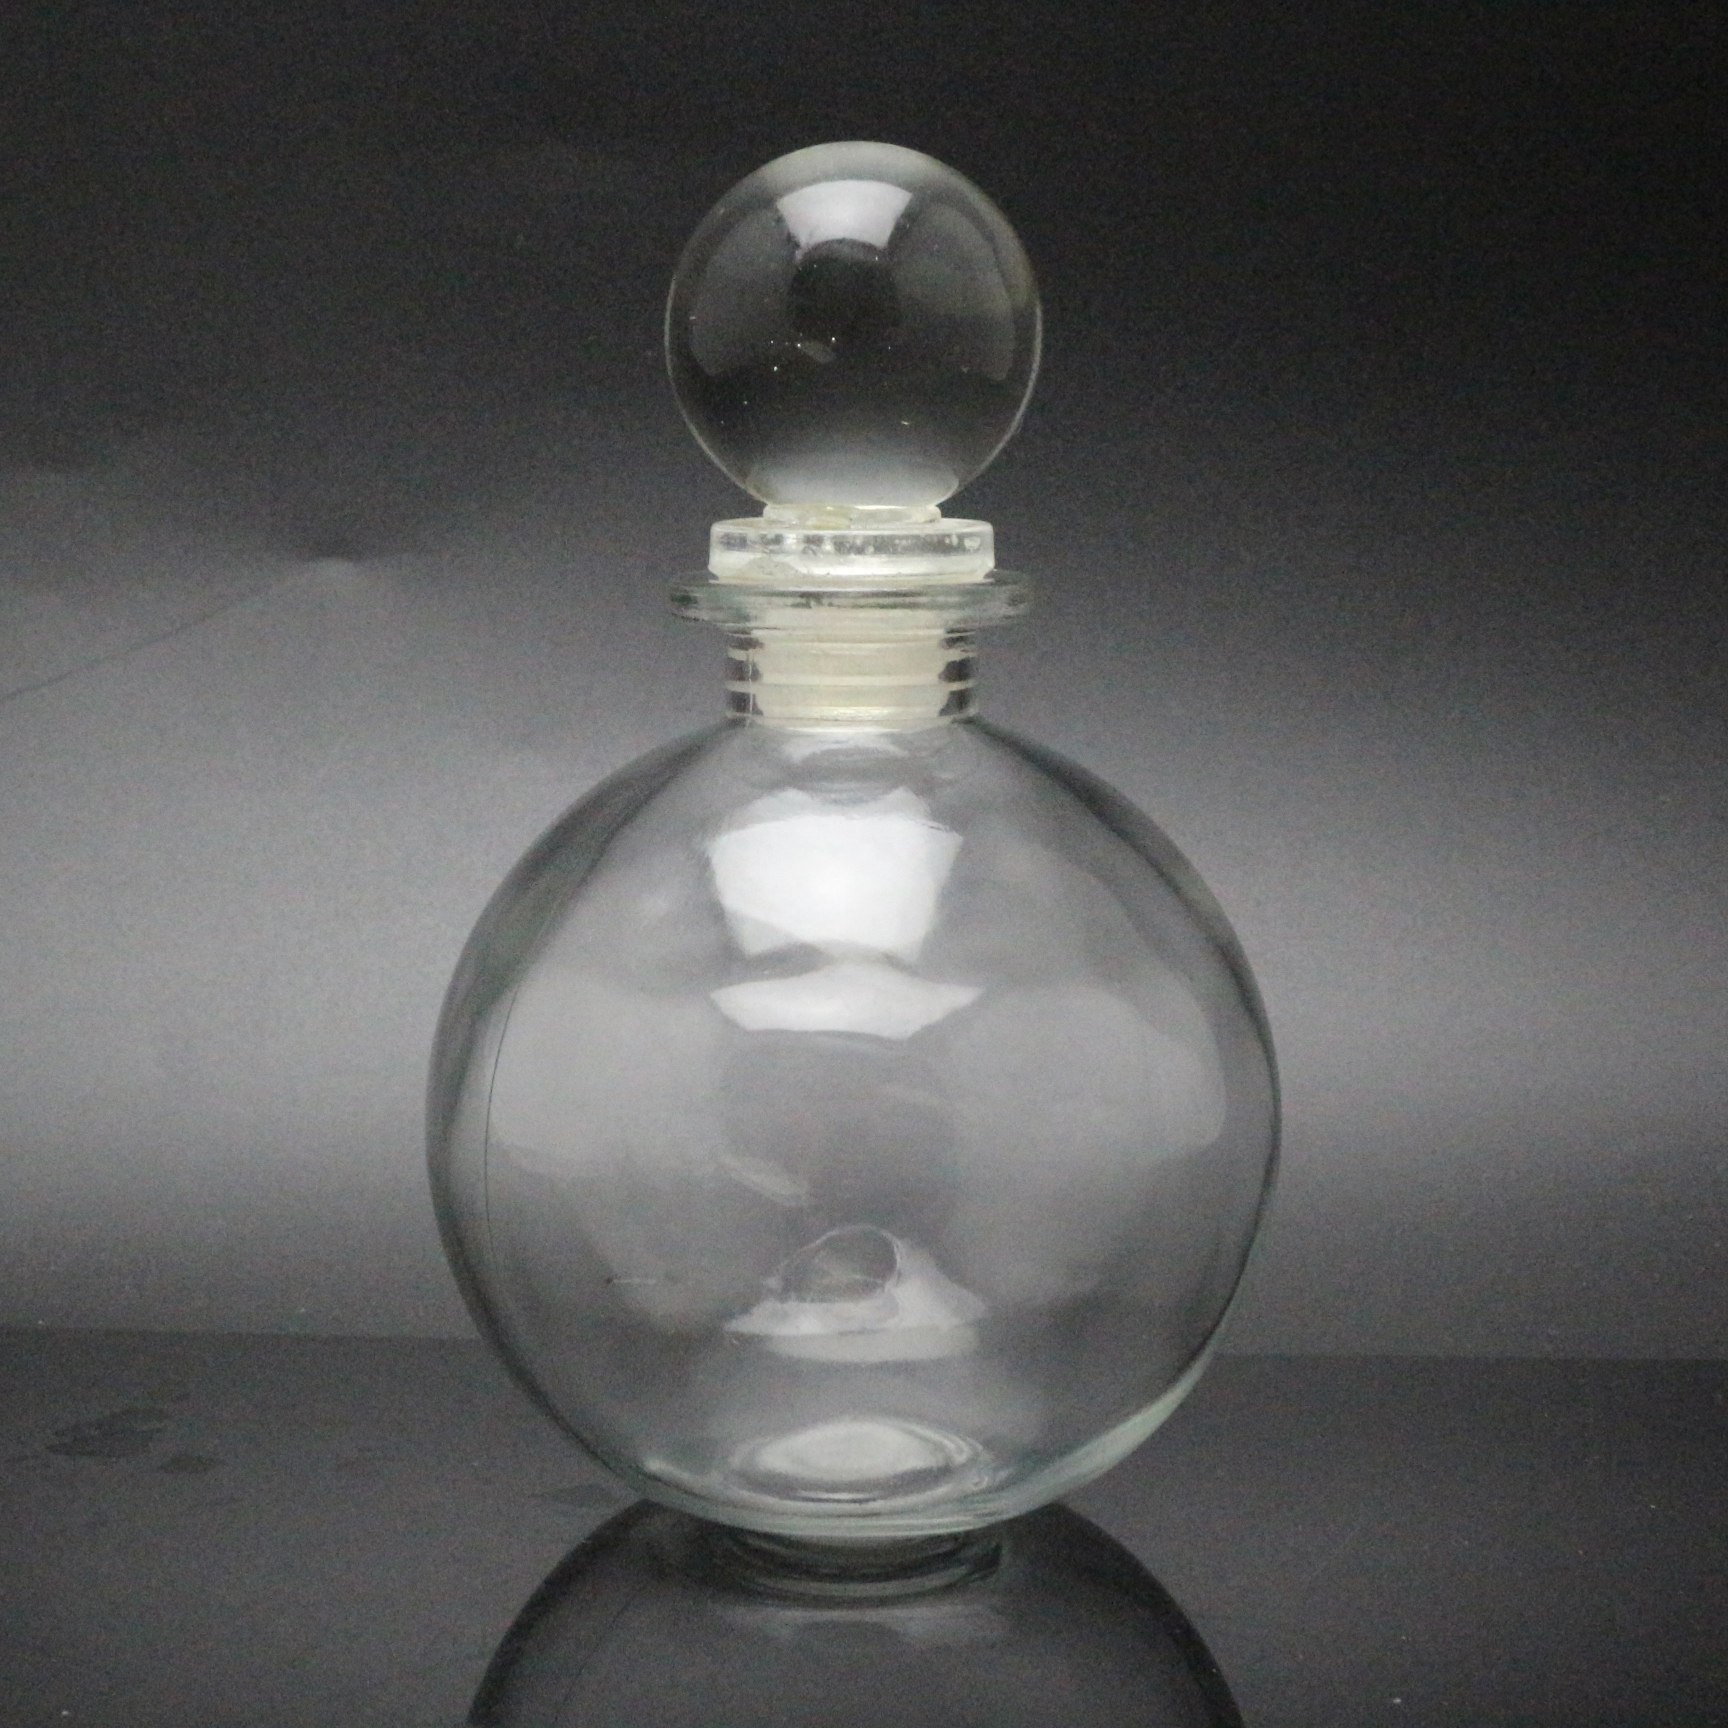 Round Decorative Glass Diffuser Bottle